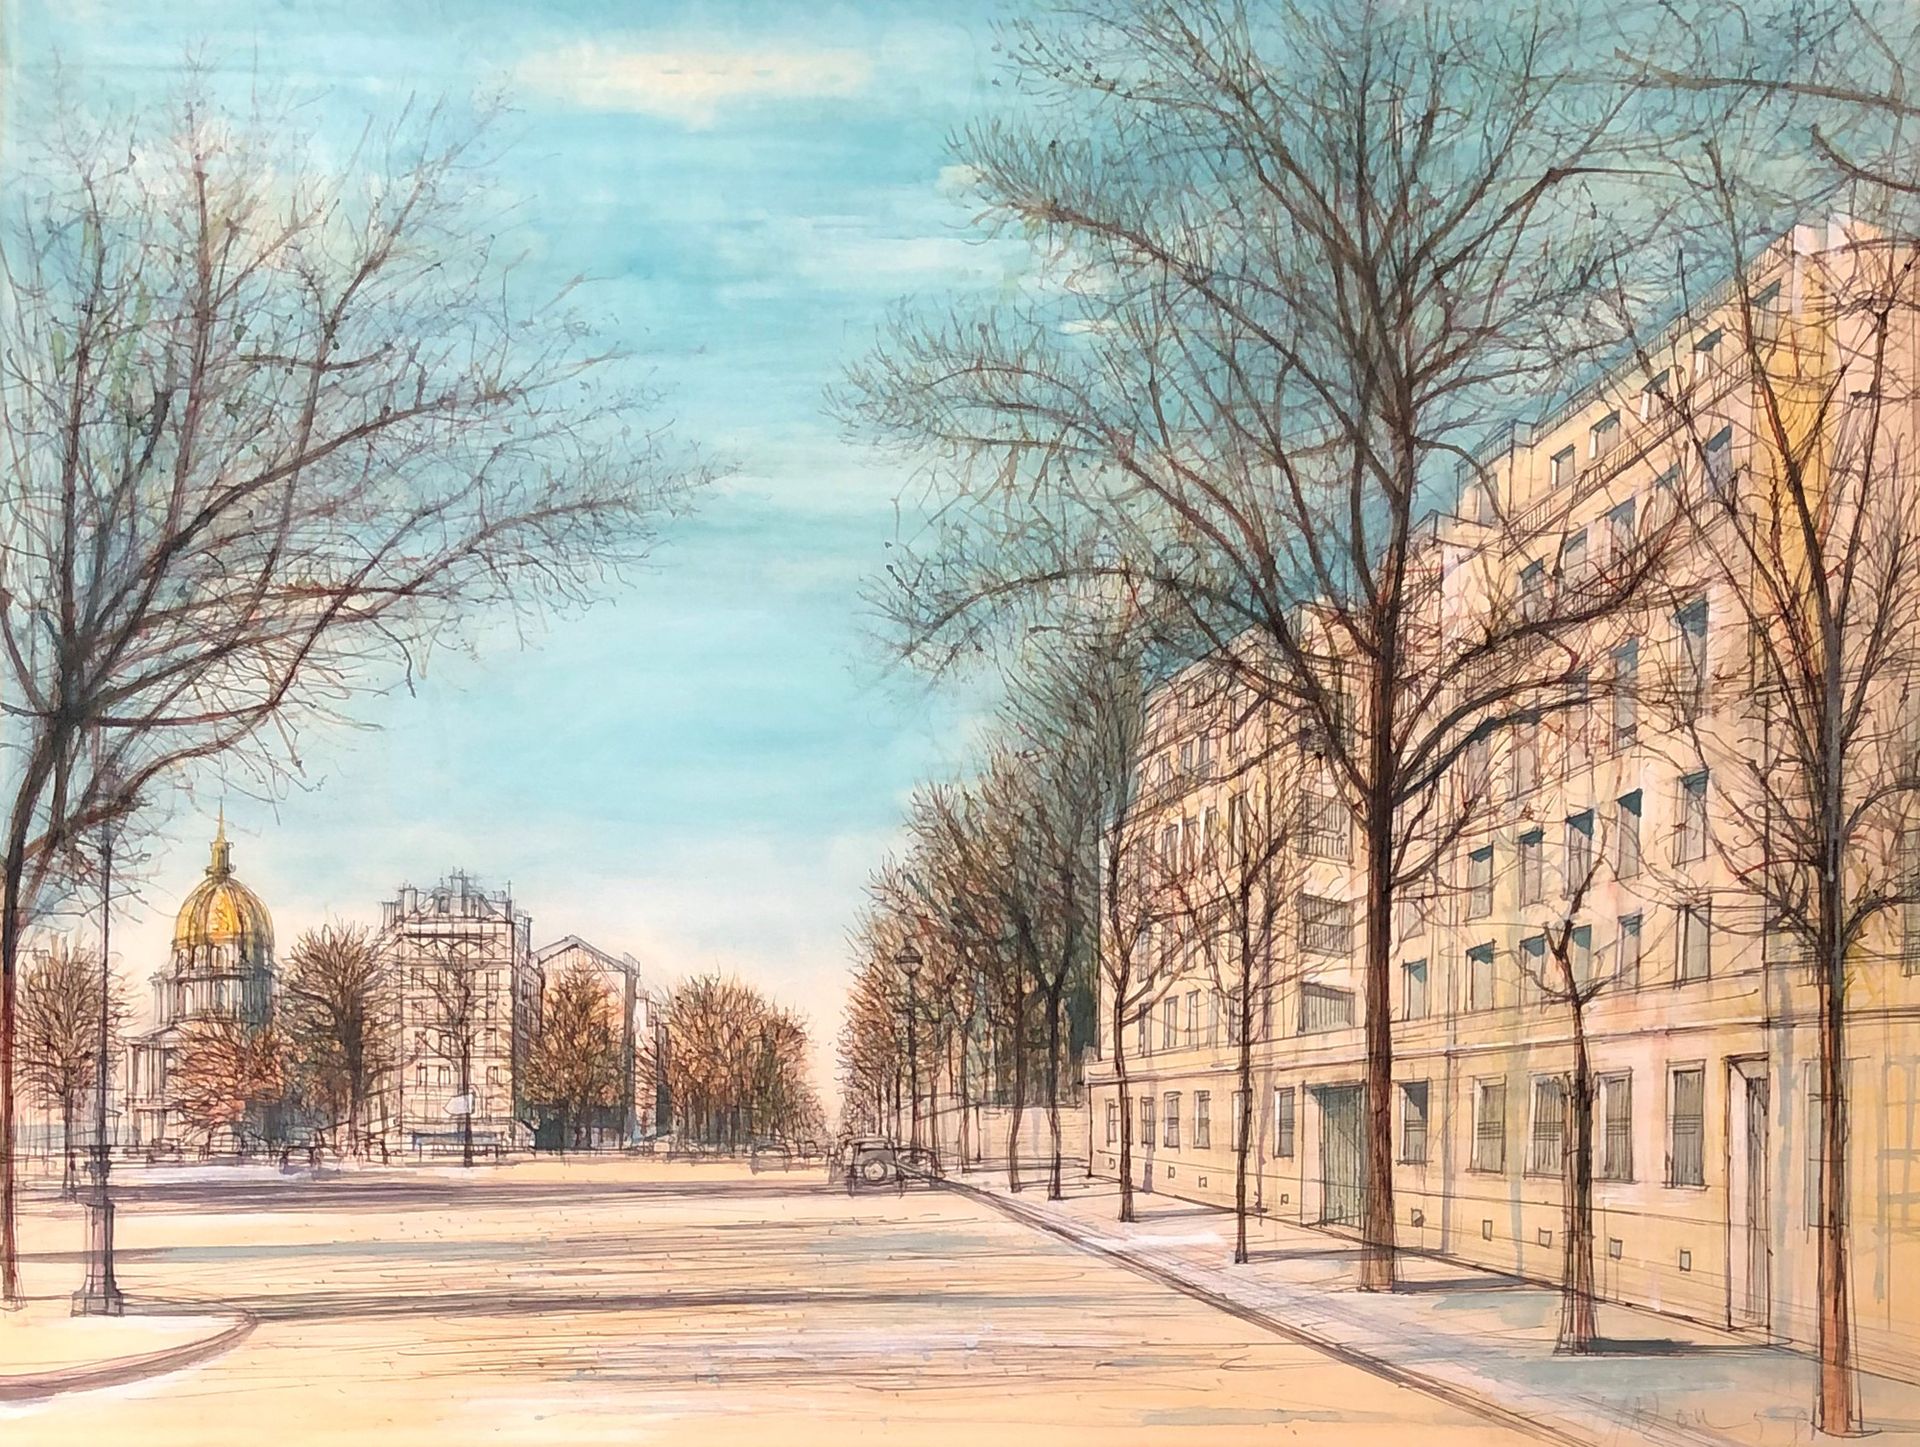 Null 让-卡尔祖（1907-2000

鲁塞尔-乌克雷夫，巴黎荣军院大道，1958年

纸上水彩、墨水和水粉高光，右下方有签名和日期。

49 x 63.5&hellip;